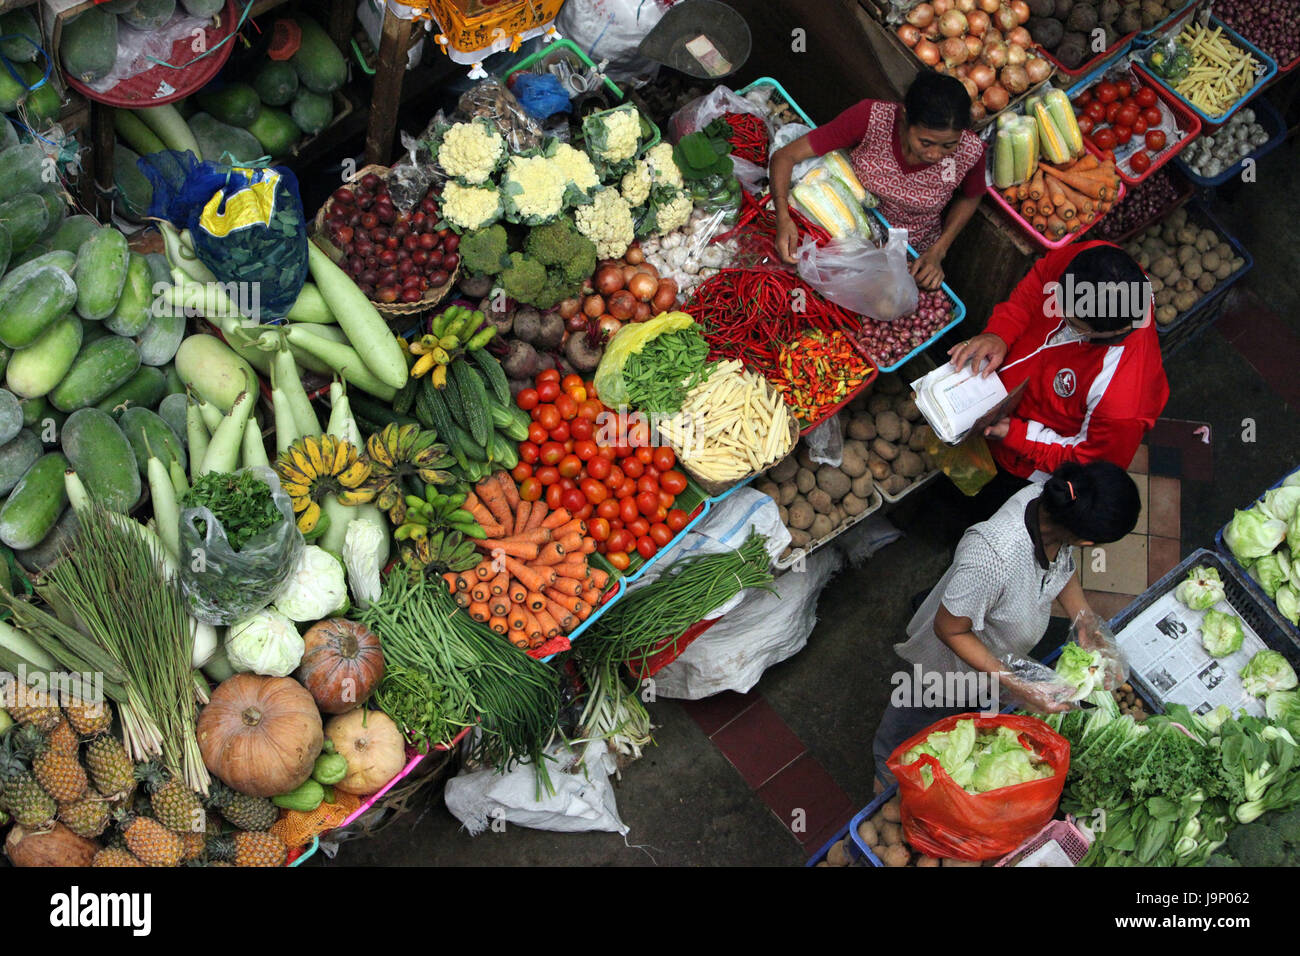 Indonesia,Bali,island,Denpasar,capital,market,vegetables,vegetable market,everyday life,Pasar Badung,work,shopping,trade, Stock Photo